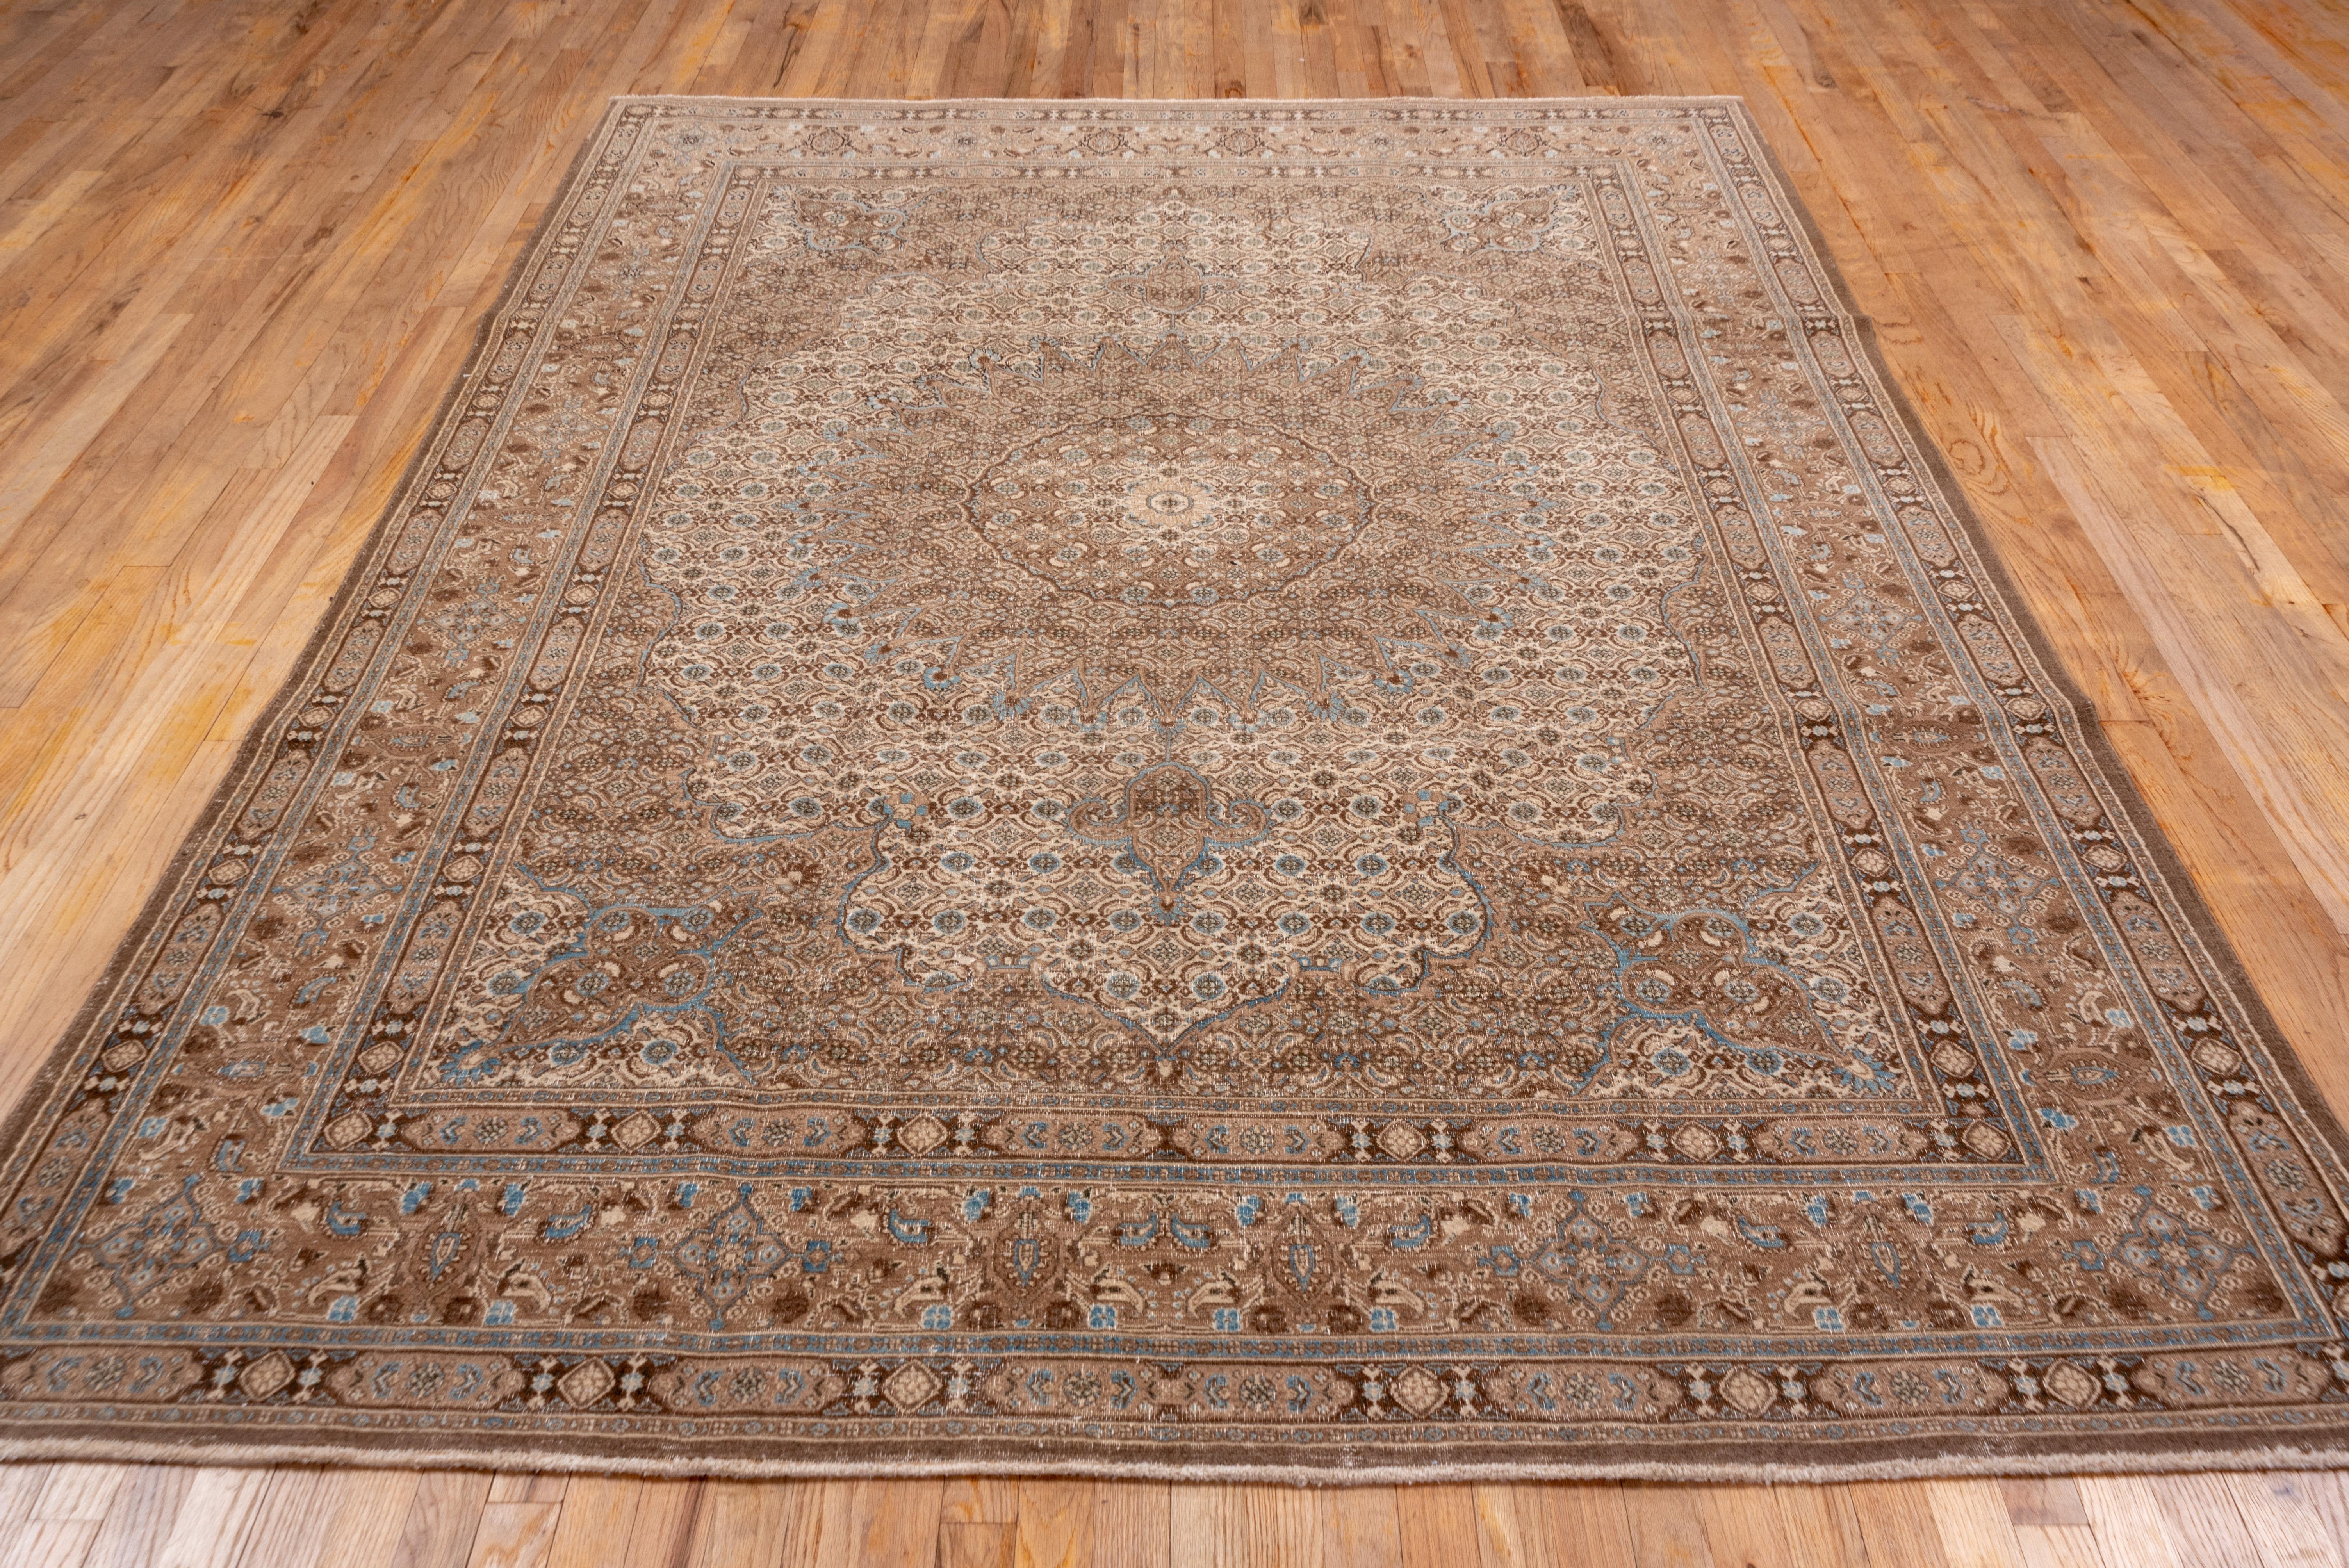 Tabriz Antique Turkish Sivas Carpet, Center Medallion, Brown and Light Blue Palette For Sale